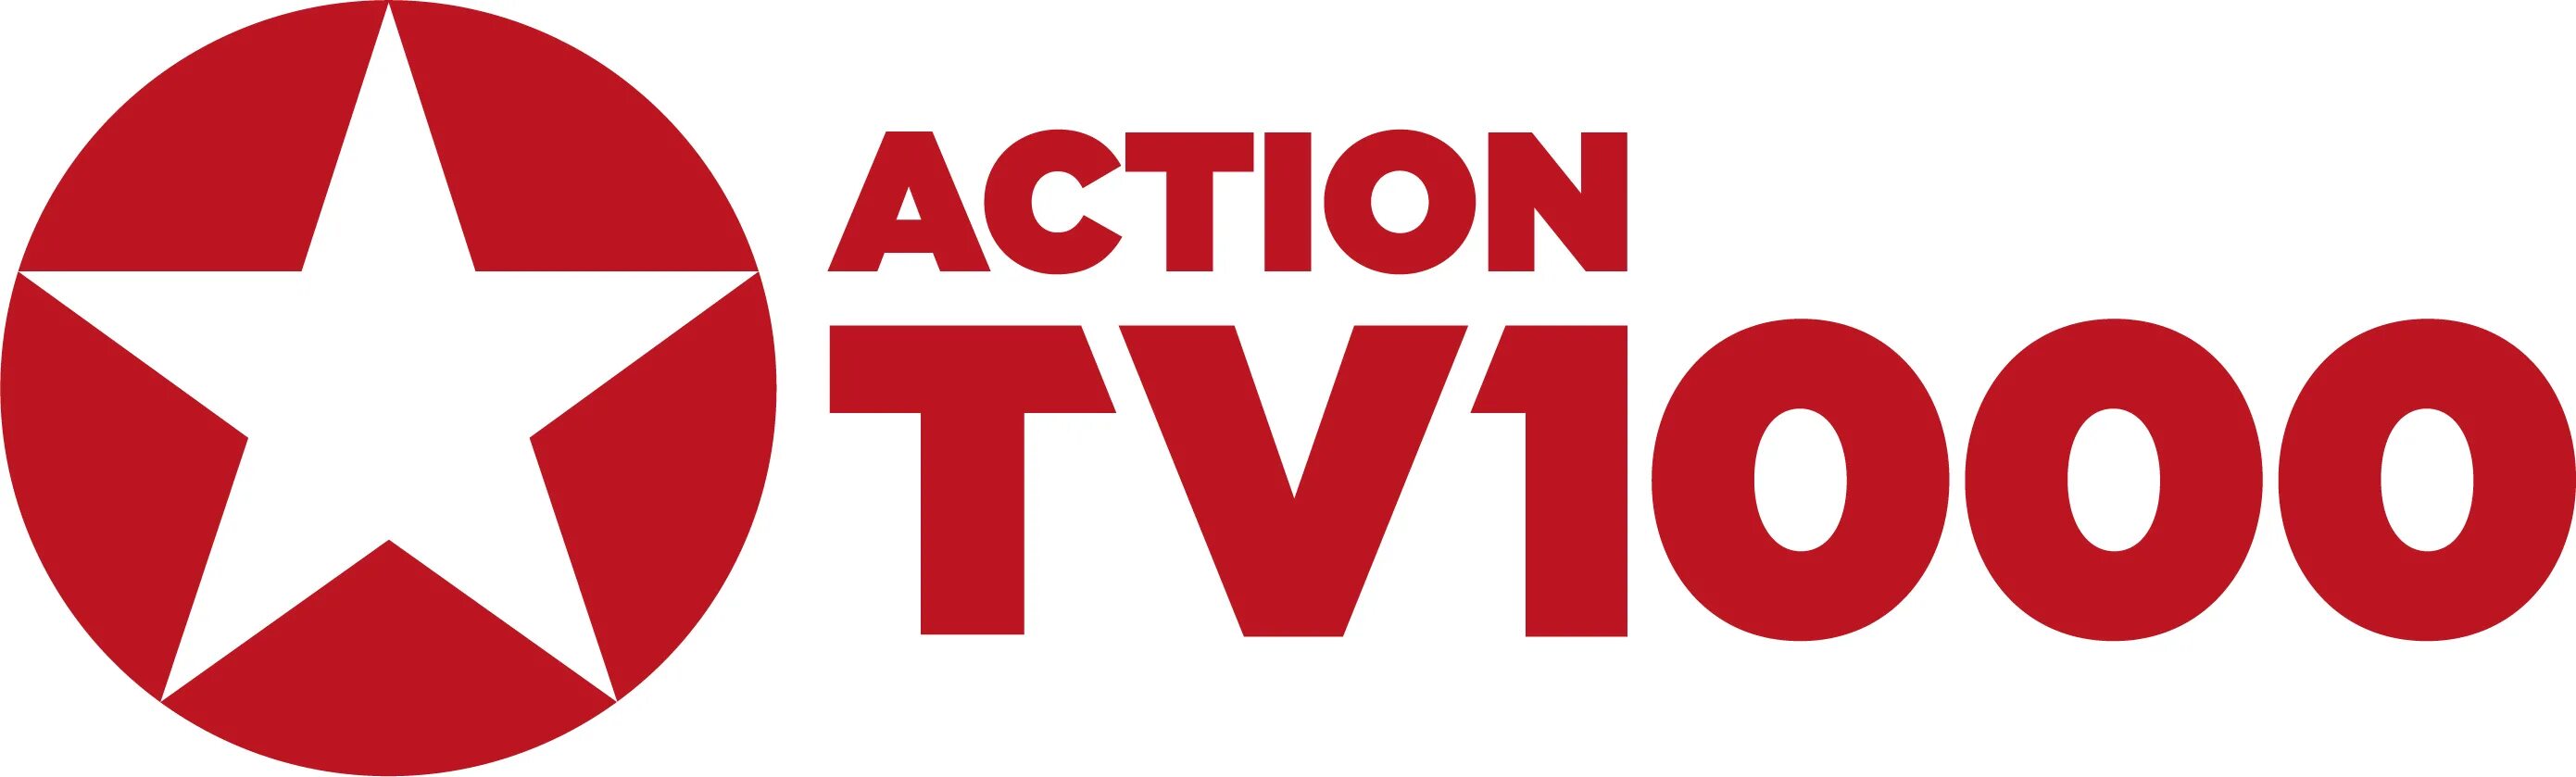 Телепрограмма viju 1000. Tv1000. Tv1000 Action. Телеканал tv1000 Action. Логотип телеканала tv1000 Action.